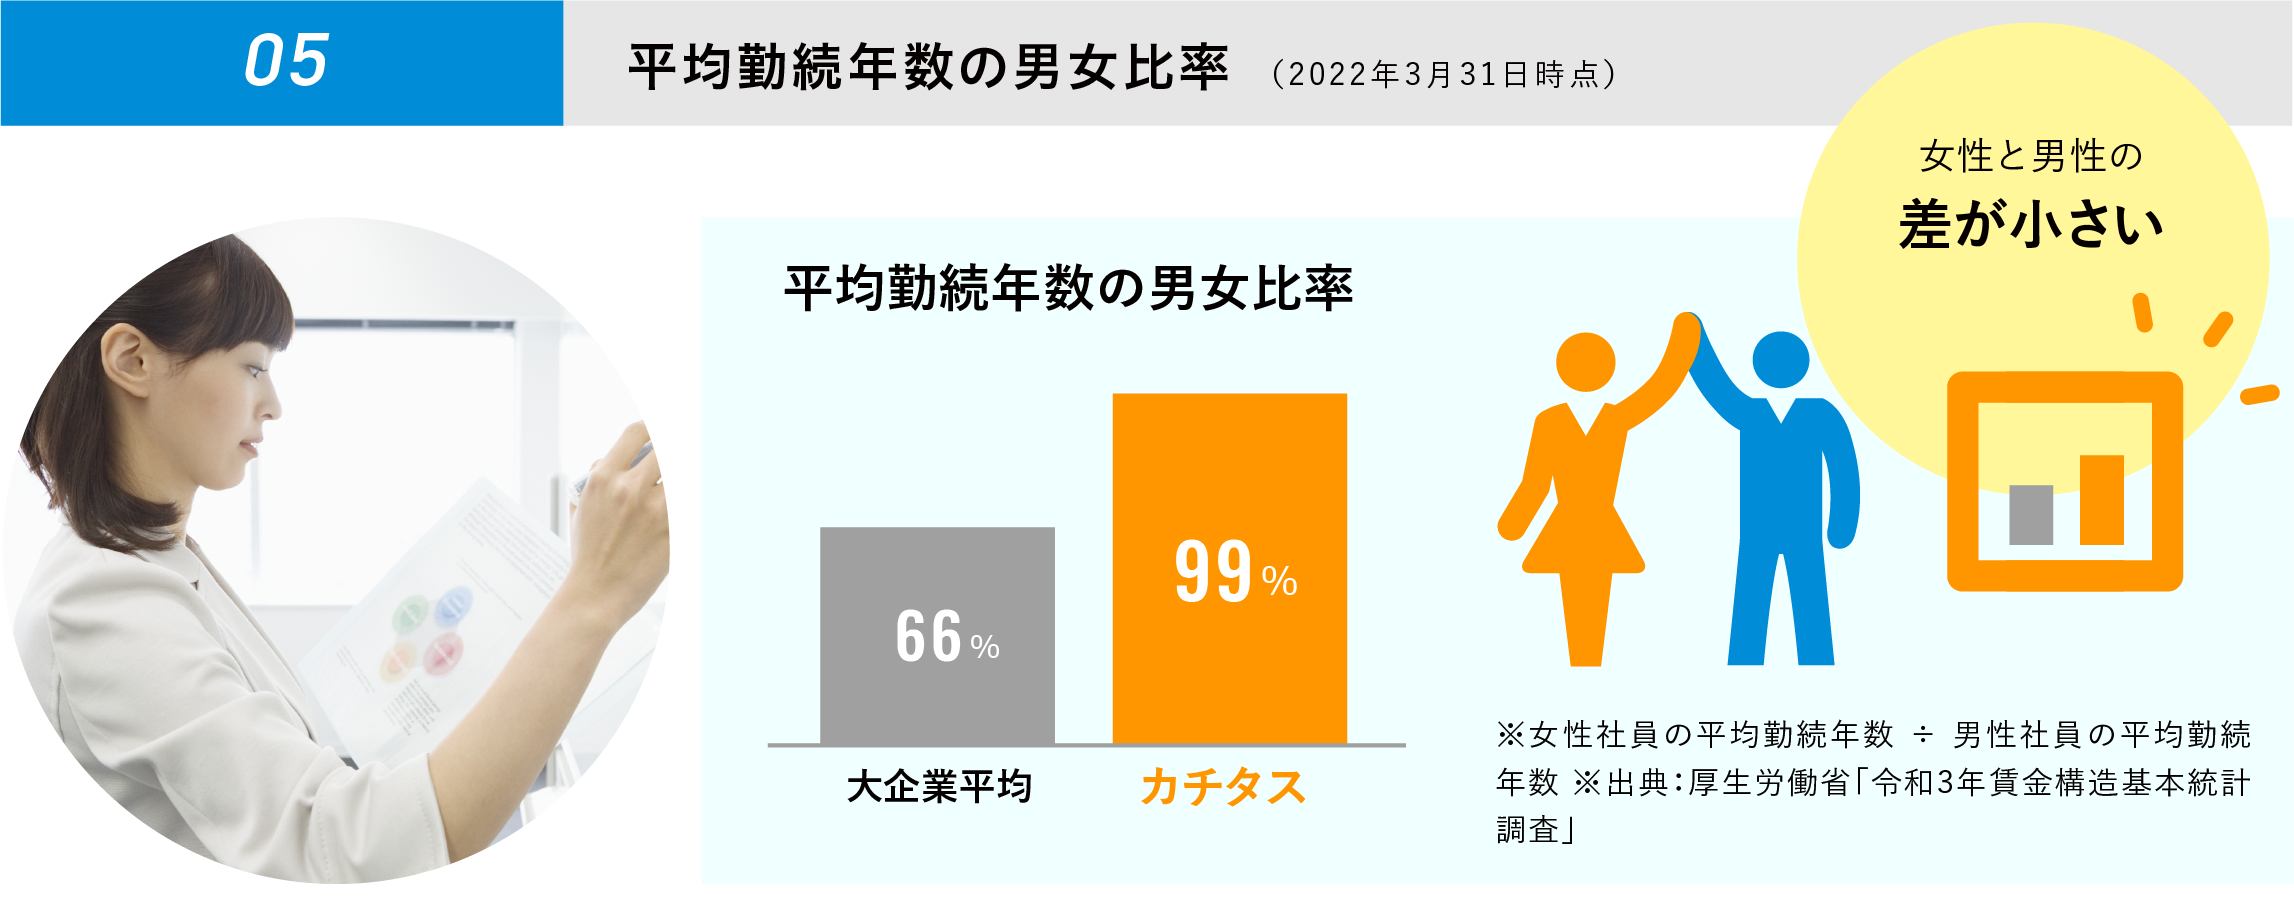 WOMAN 05 平均勤続年数の男女比率